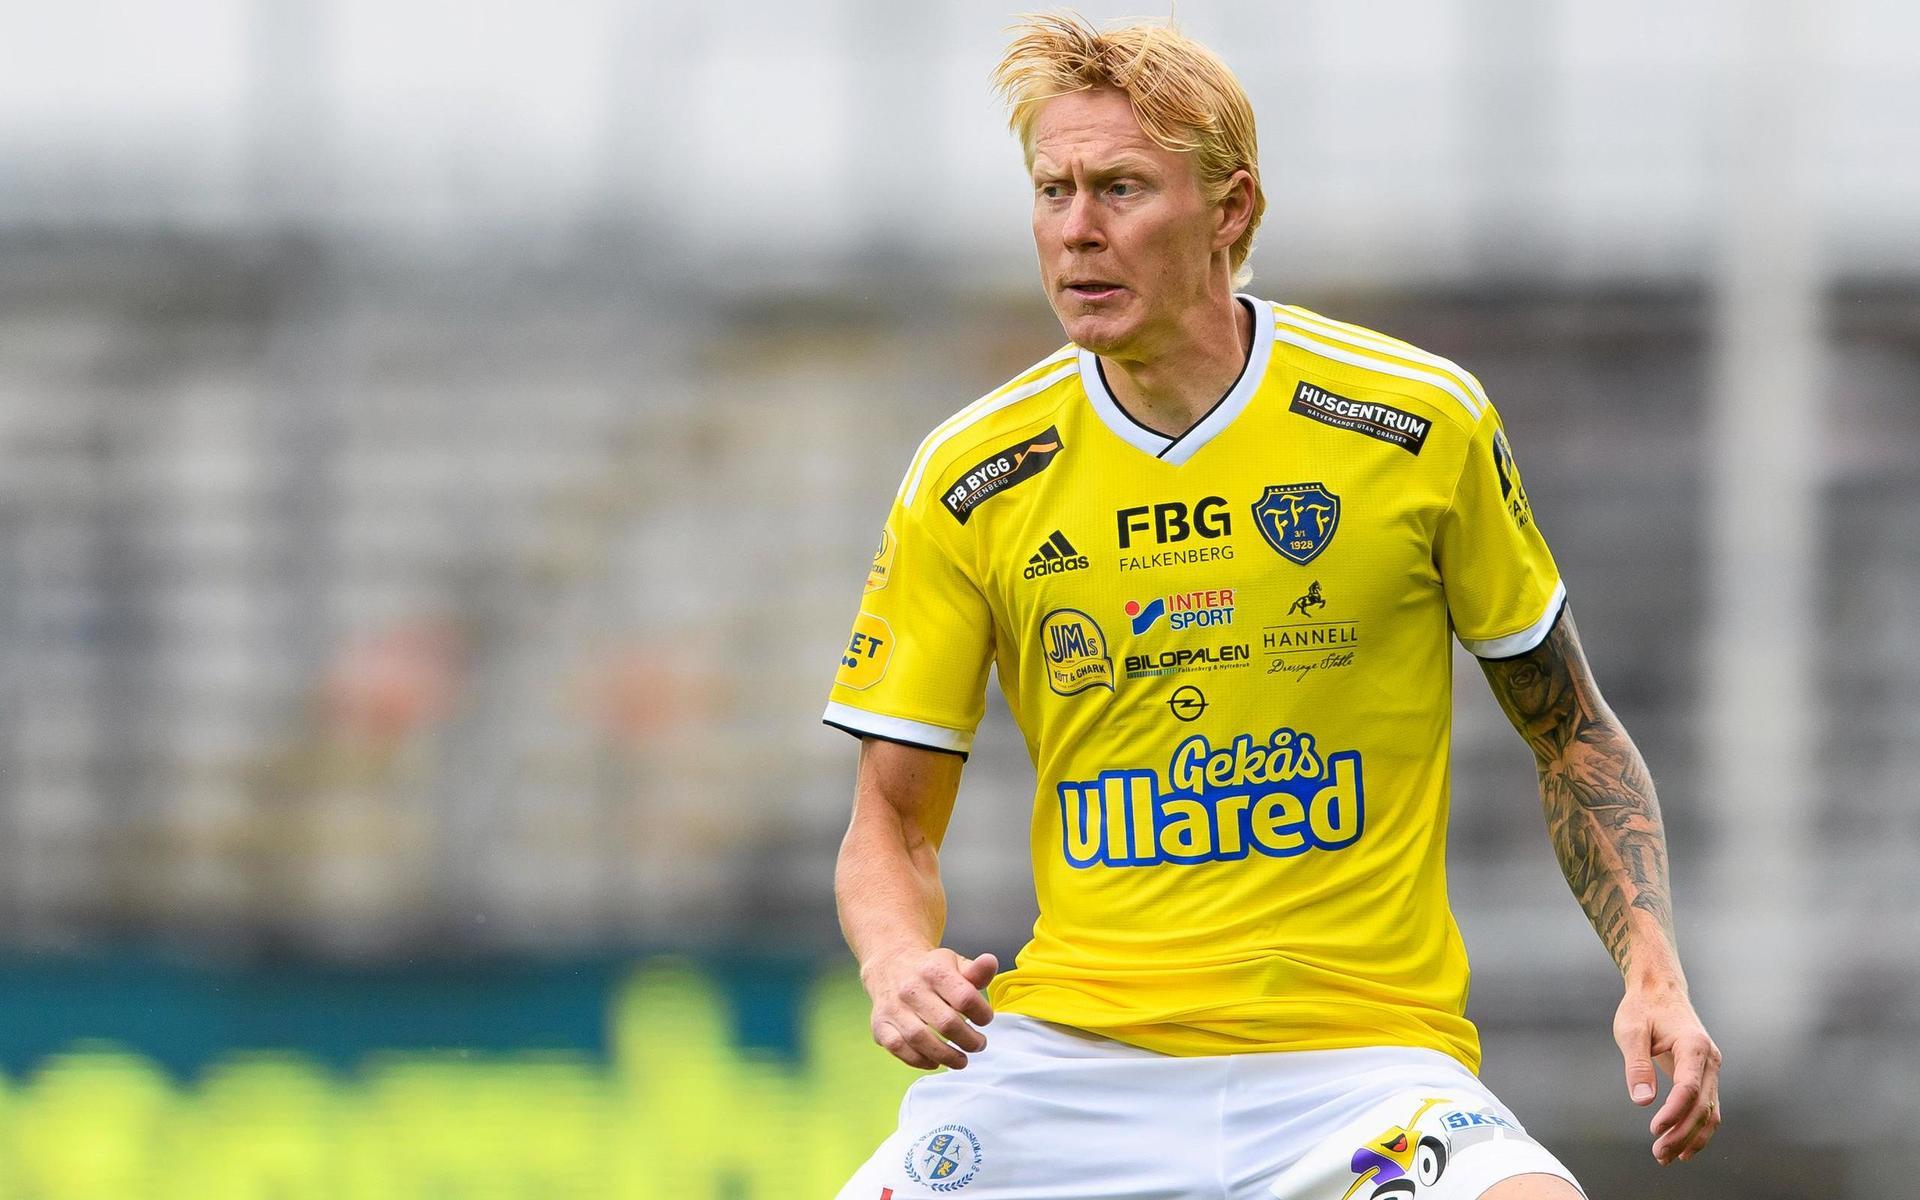 Av de 18 matcher Falkenbergs FF har spelat i Allsvenskan, har Jacob Ericsson startat i sju av dem. 